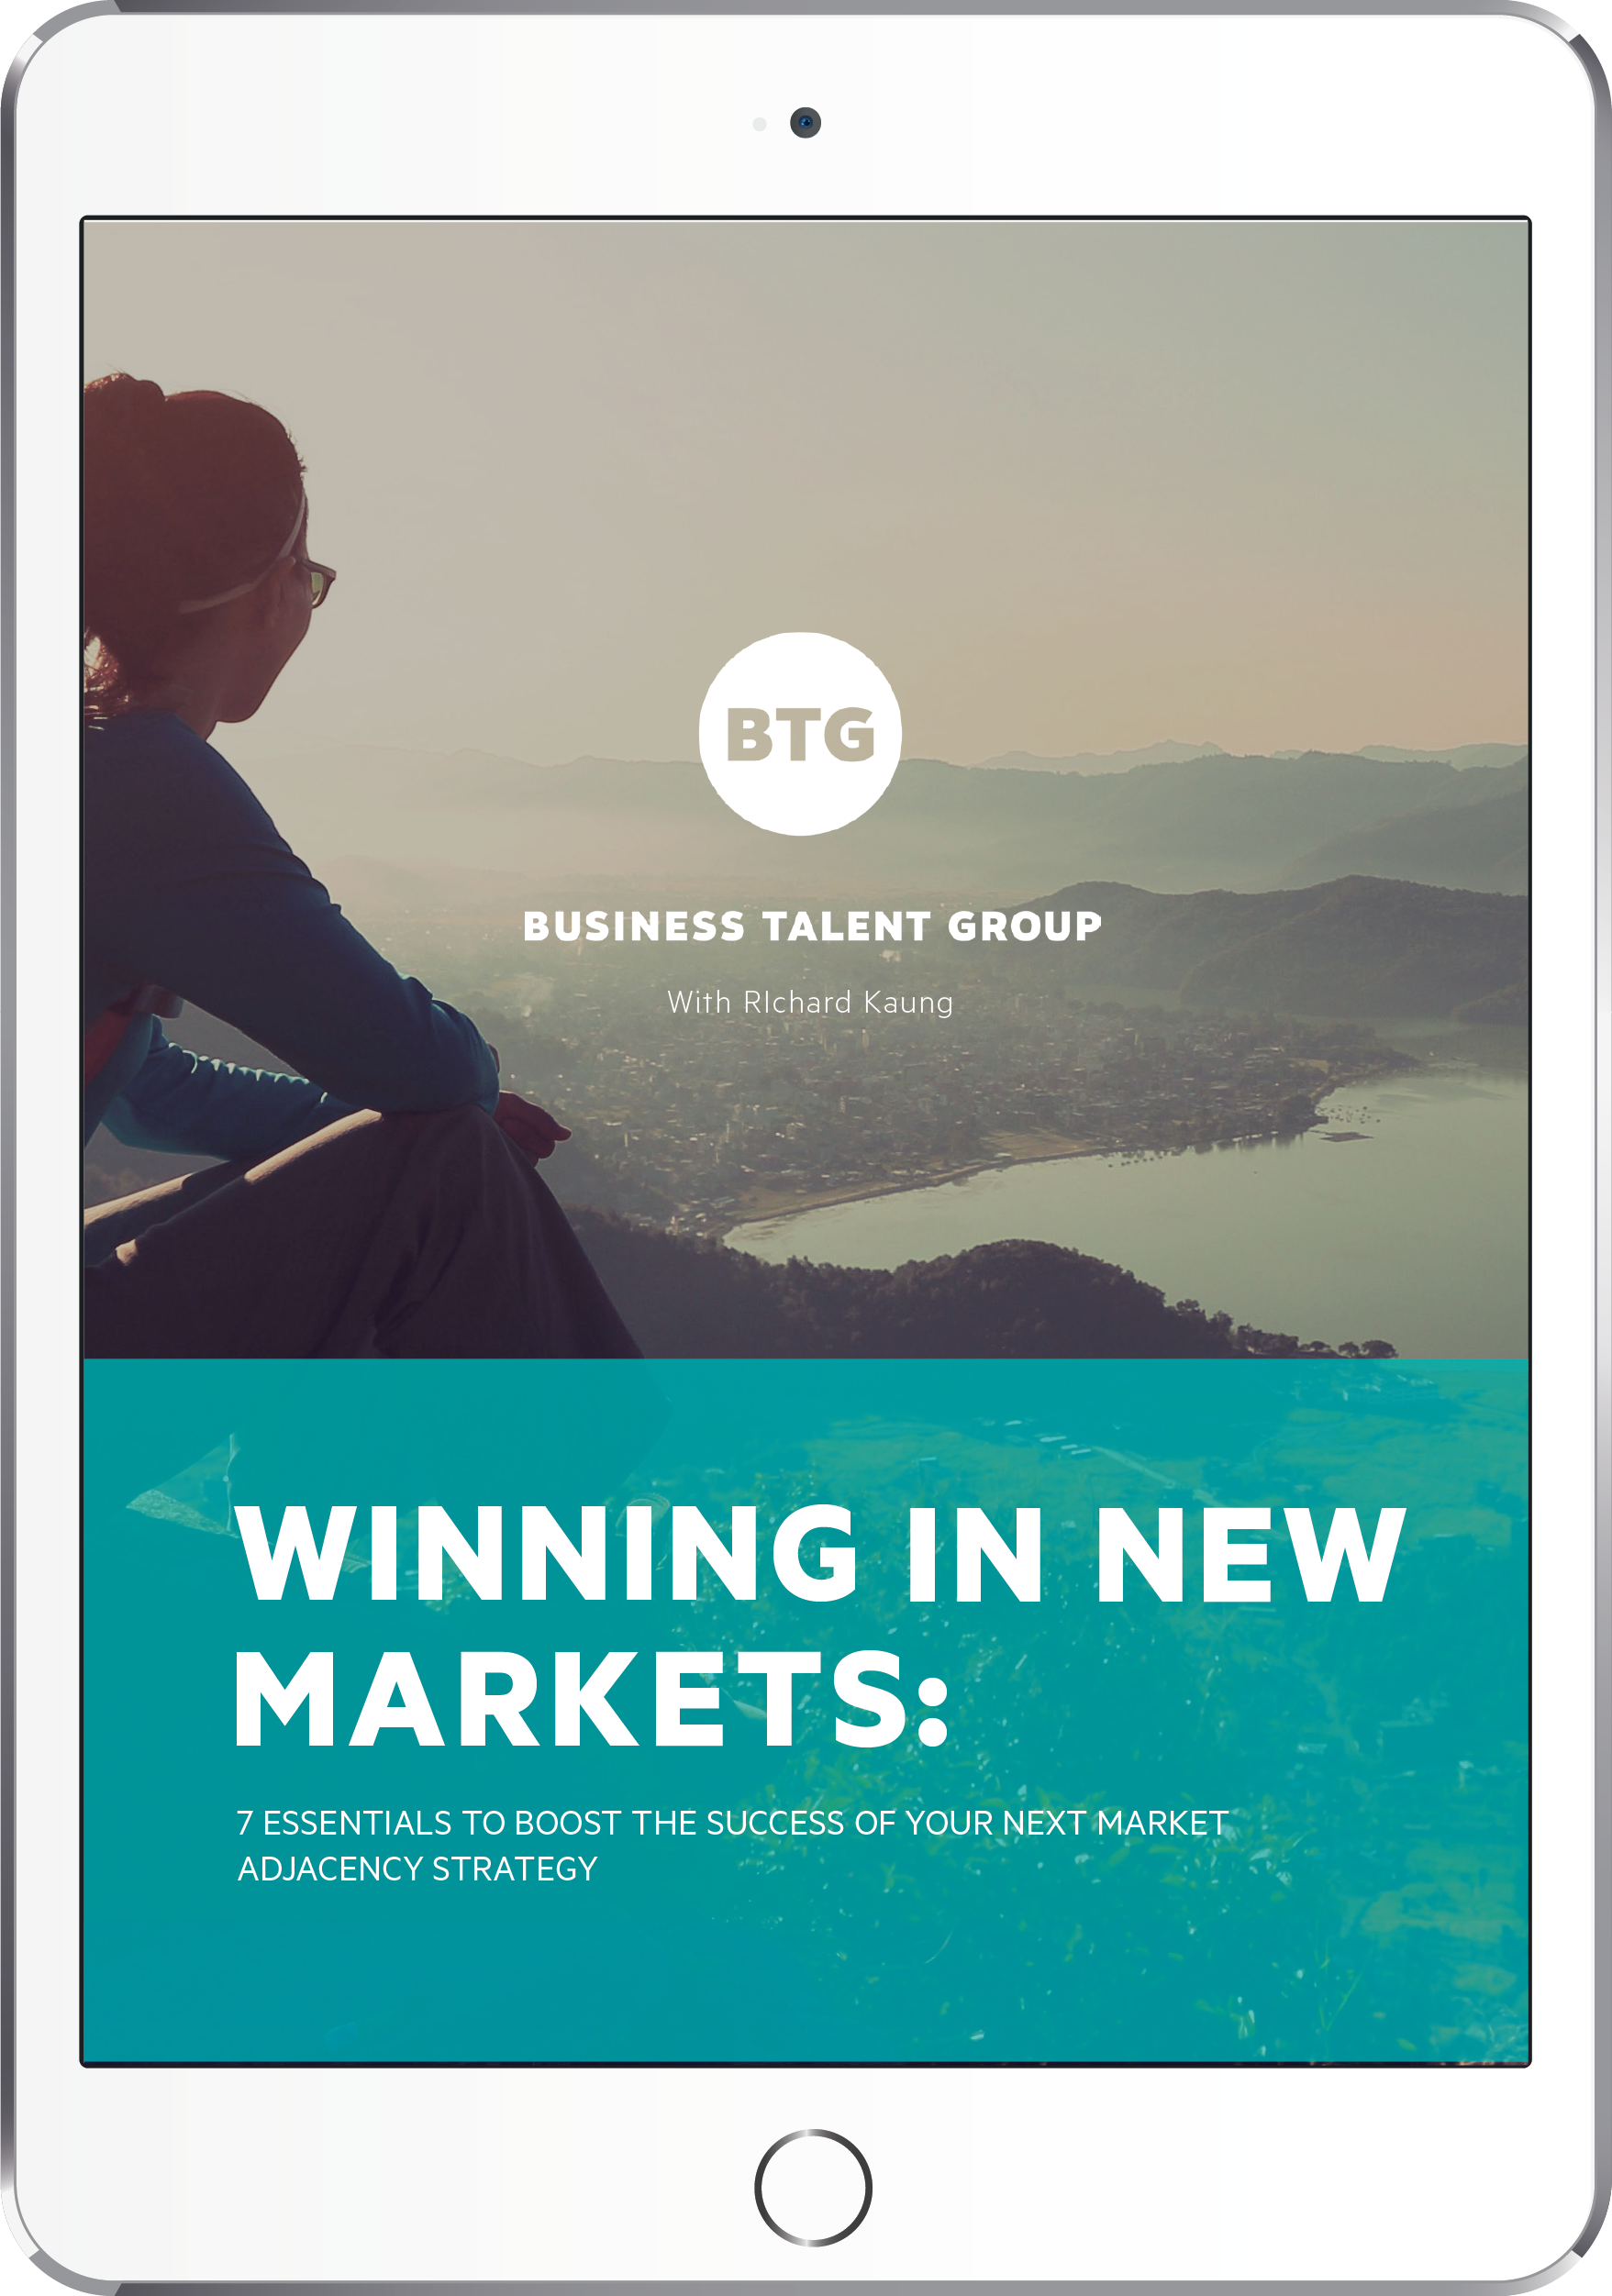 Winning in New Markets ebook on an iPad screen